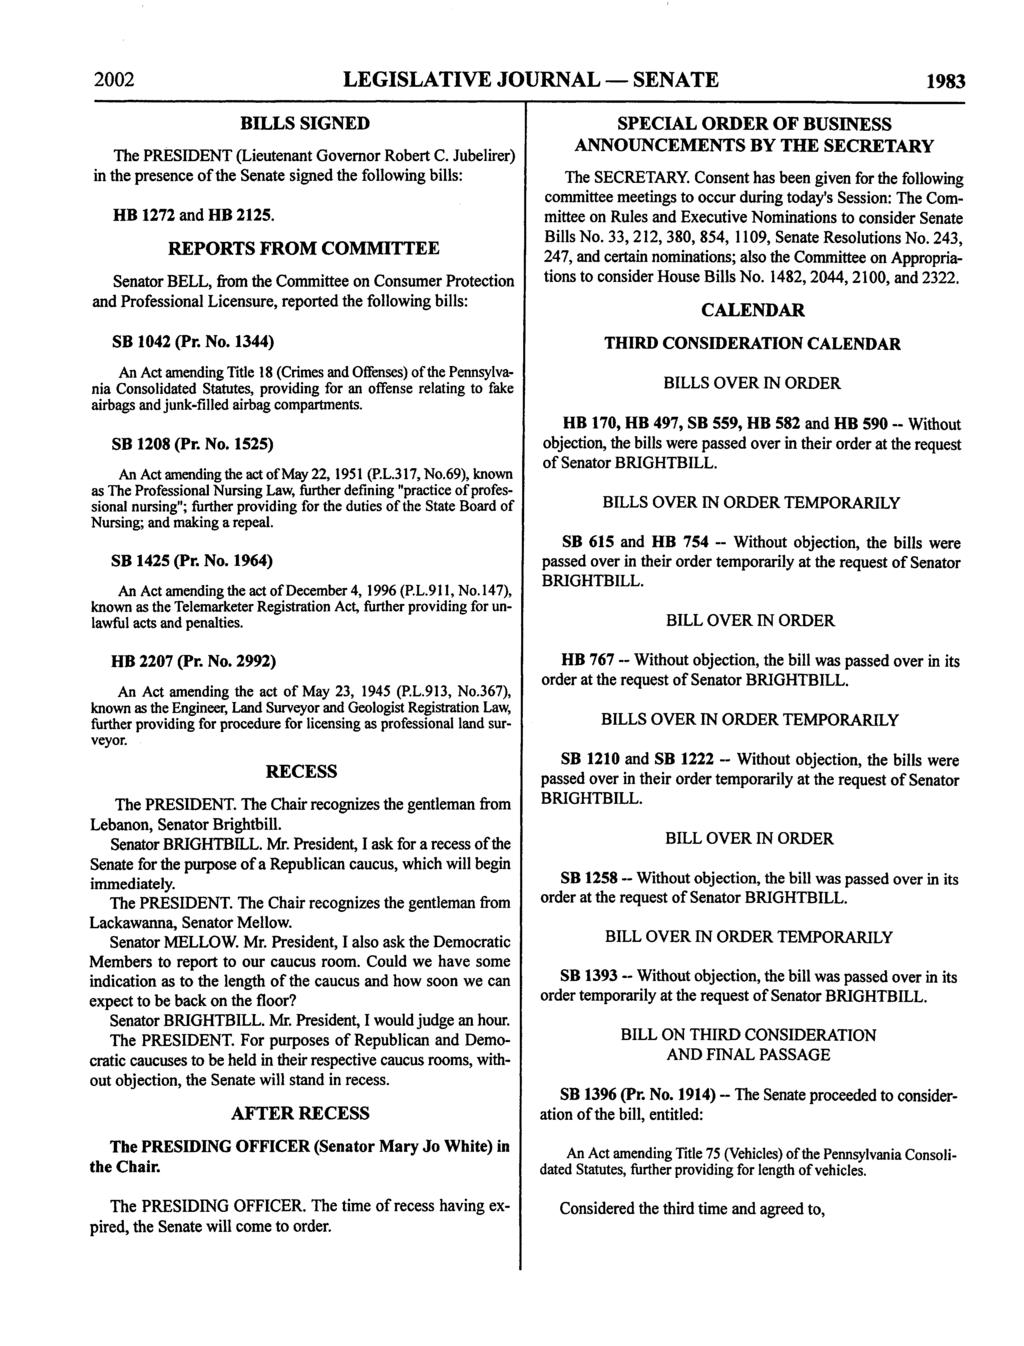 2002 LEGISLATIVE JOURNAL SENATE 1983 BILLS SIGNED The PRESIDENT (Lieutenant Robert C. Jubelirer) in the presence of the Senate signed the following bills: HB 1272 and HB 2125.